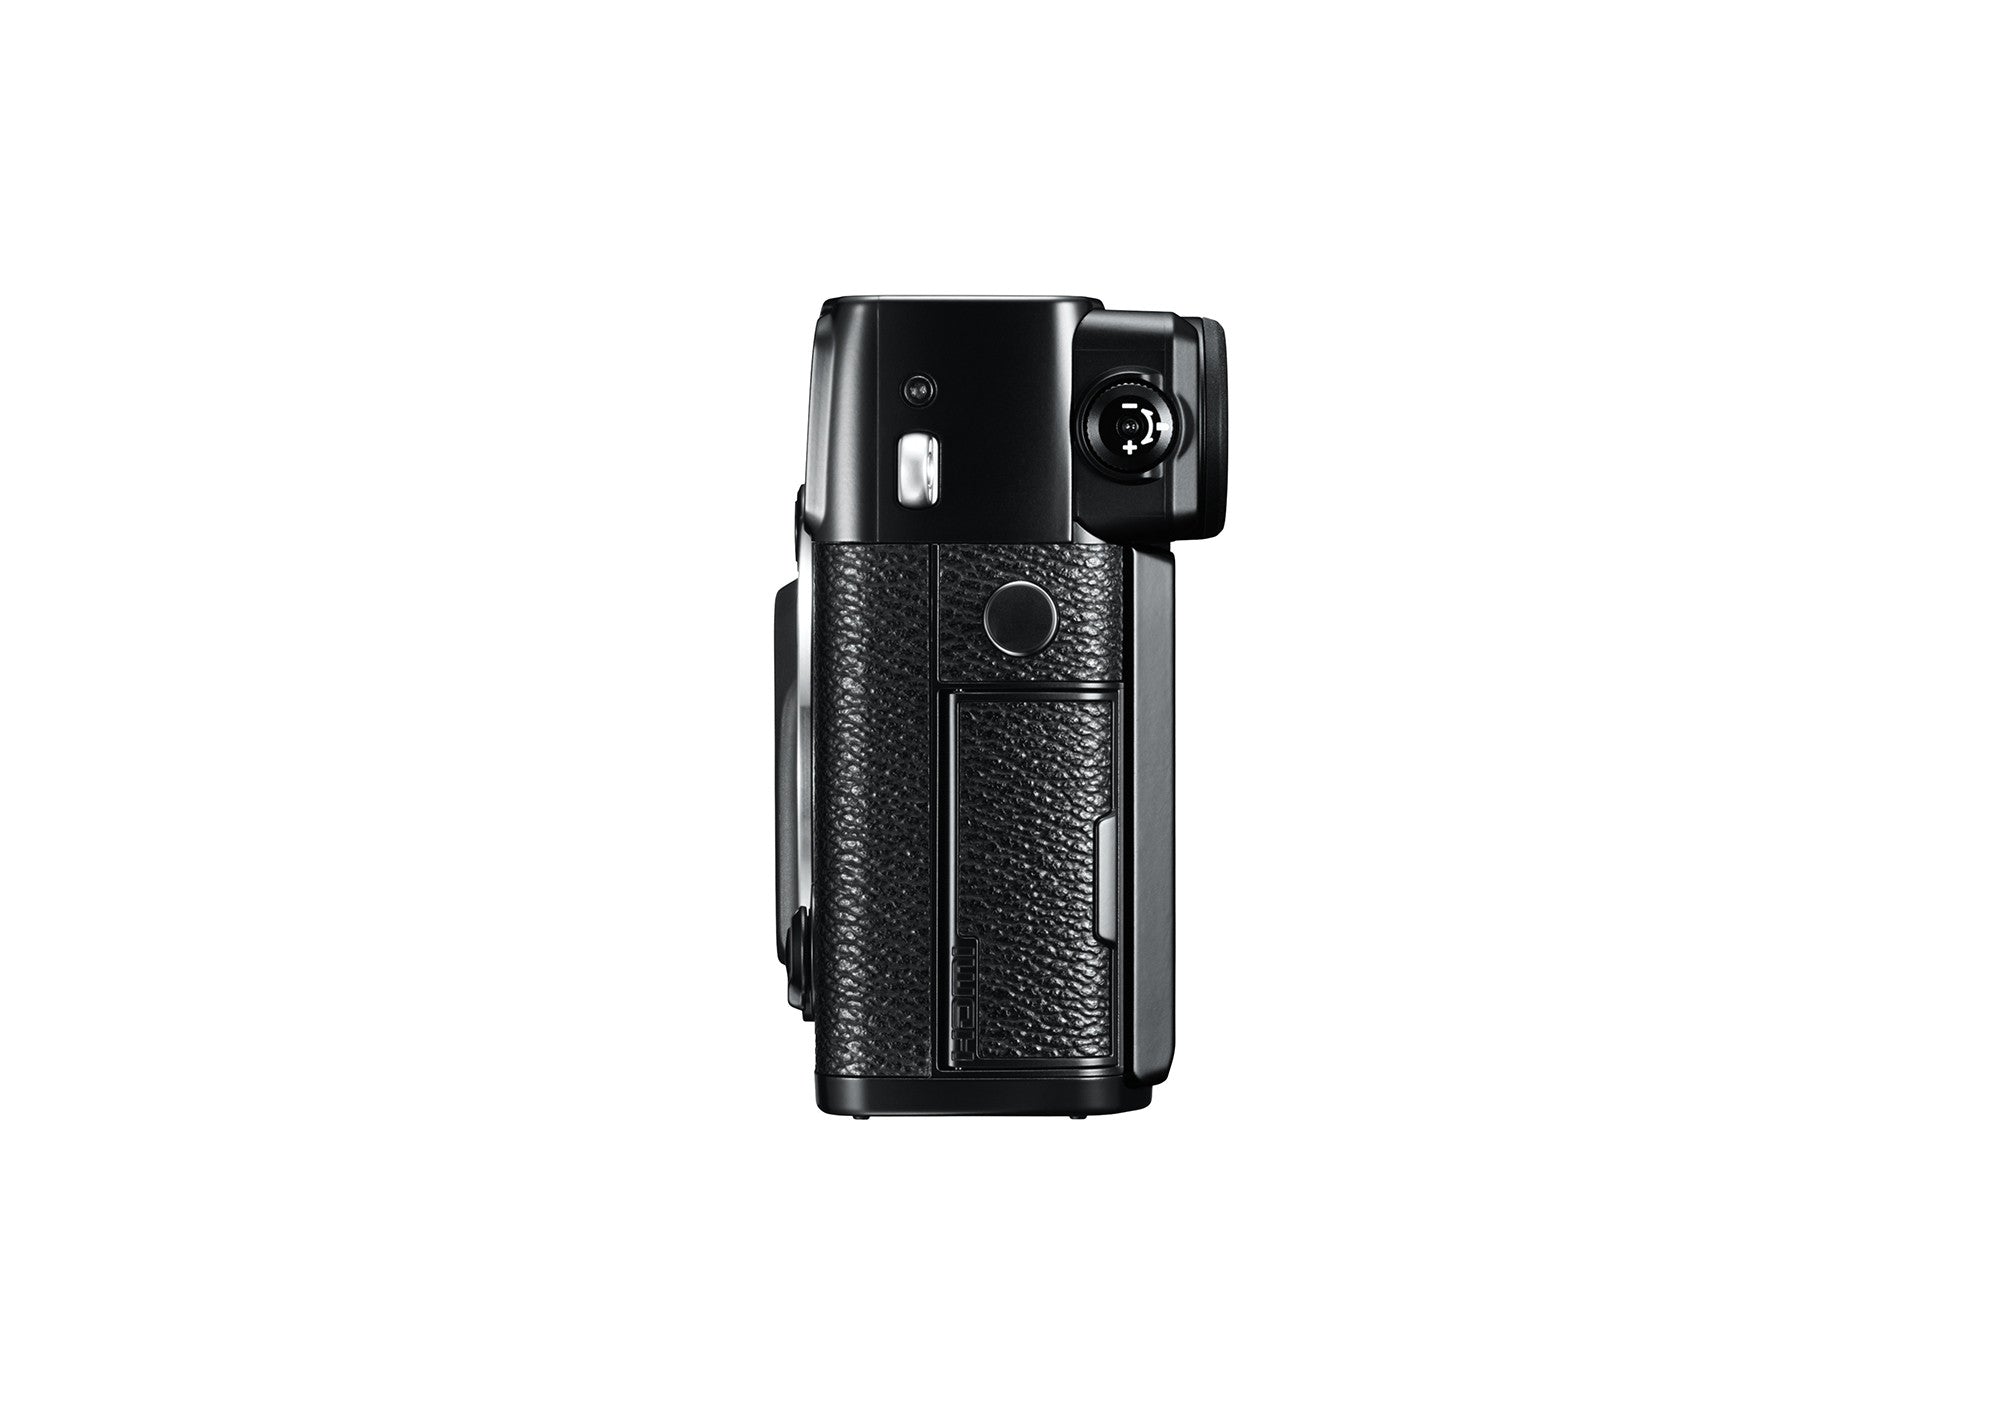 Fujifilm X-Pro2 Digital Camera Body (Black), camera mirrorless cameras, Fujifilm - Pictureline  - 4